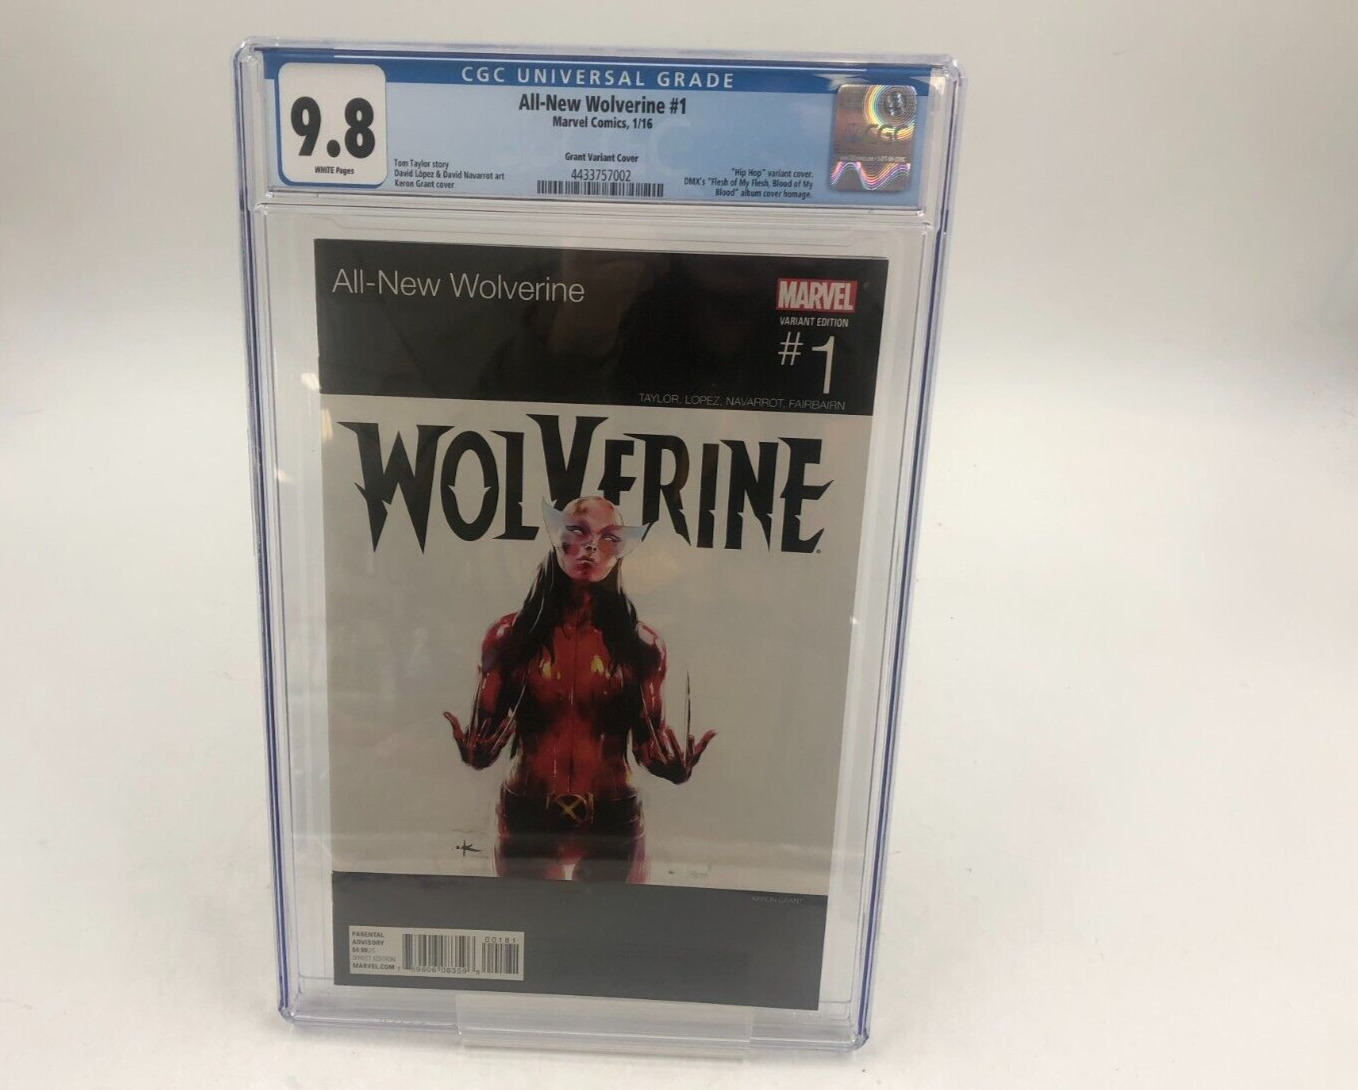 All-New Wolverine #1 CGC 9.8 Grant Hip Hop Variant Cover DMX Marvel 2016